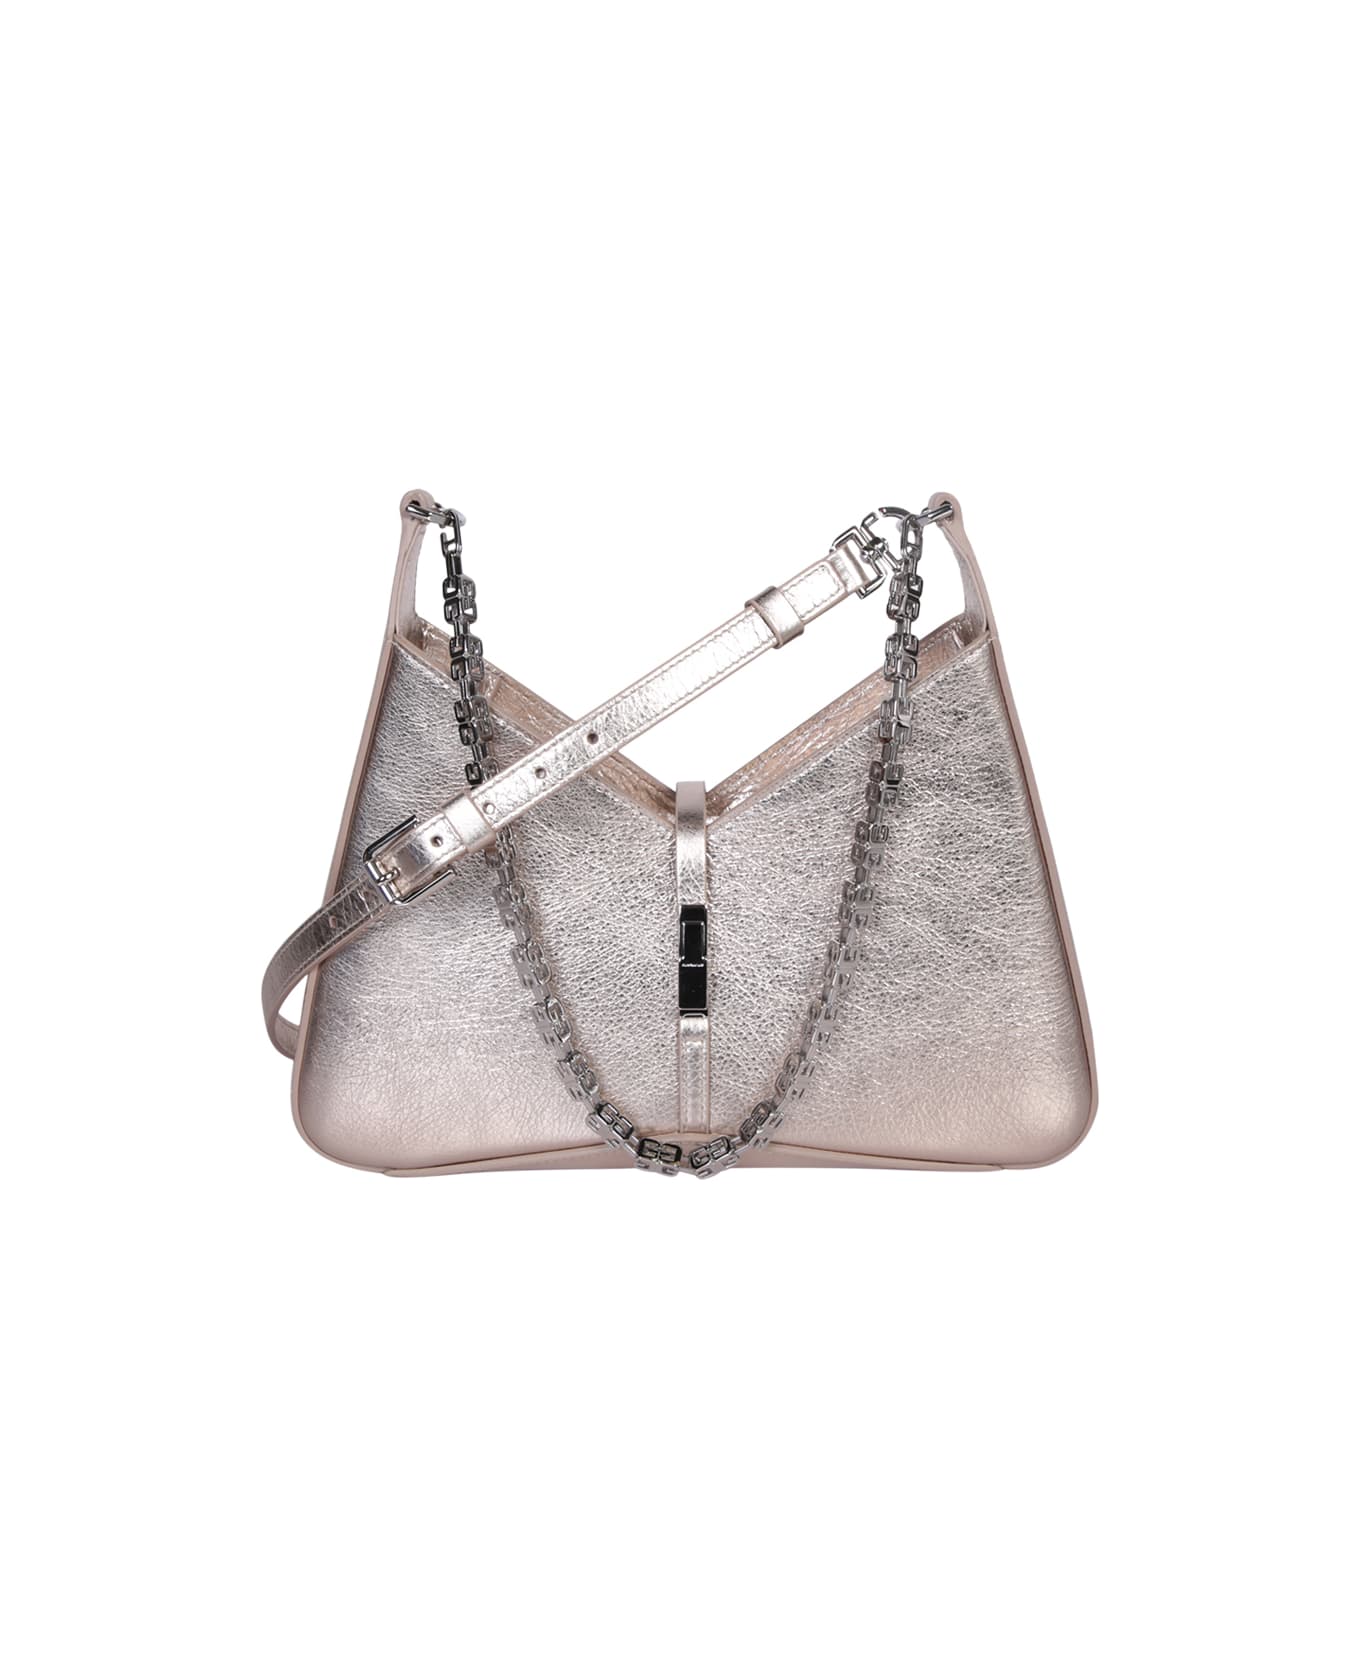 Givenchy Cut-out Shoulder Bag - Metallic